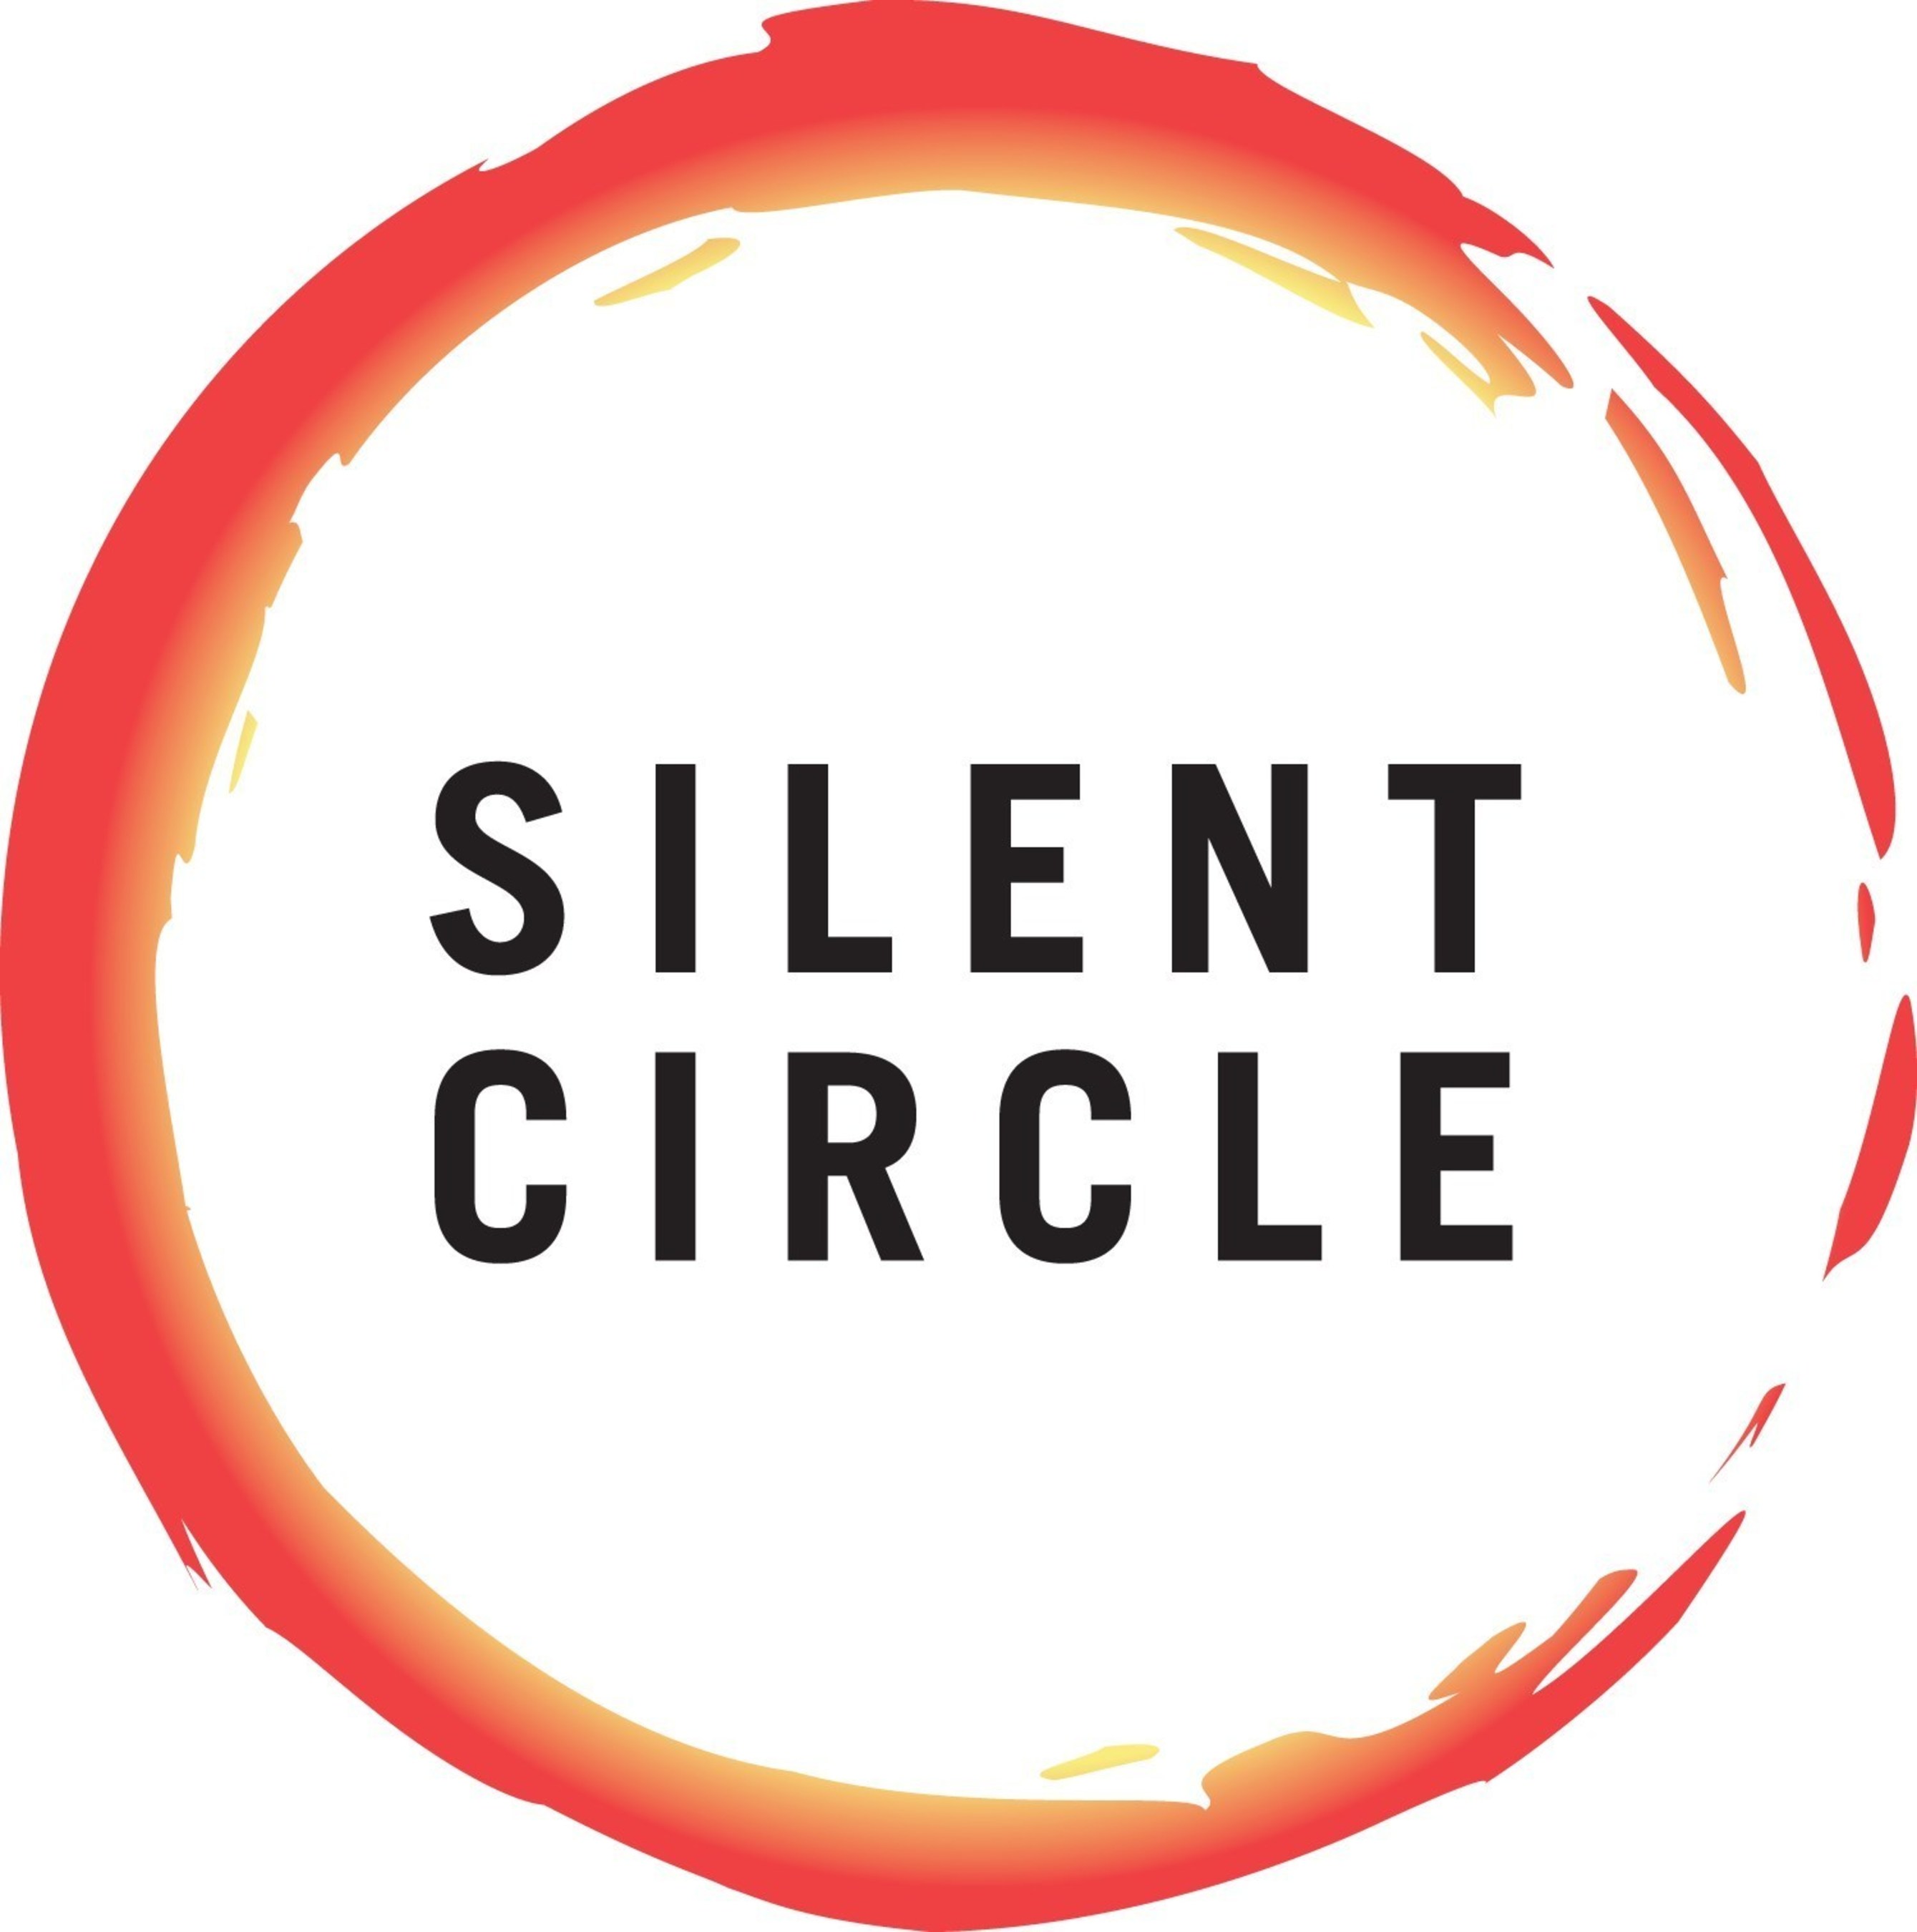 Silent Circle